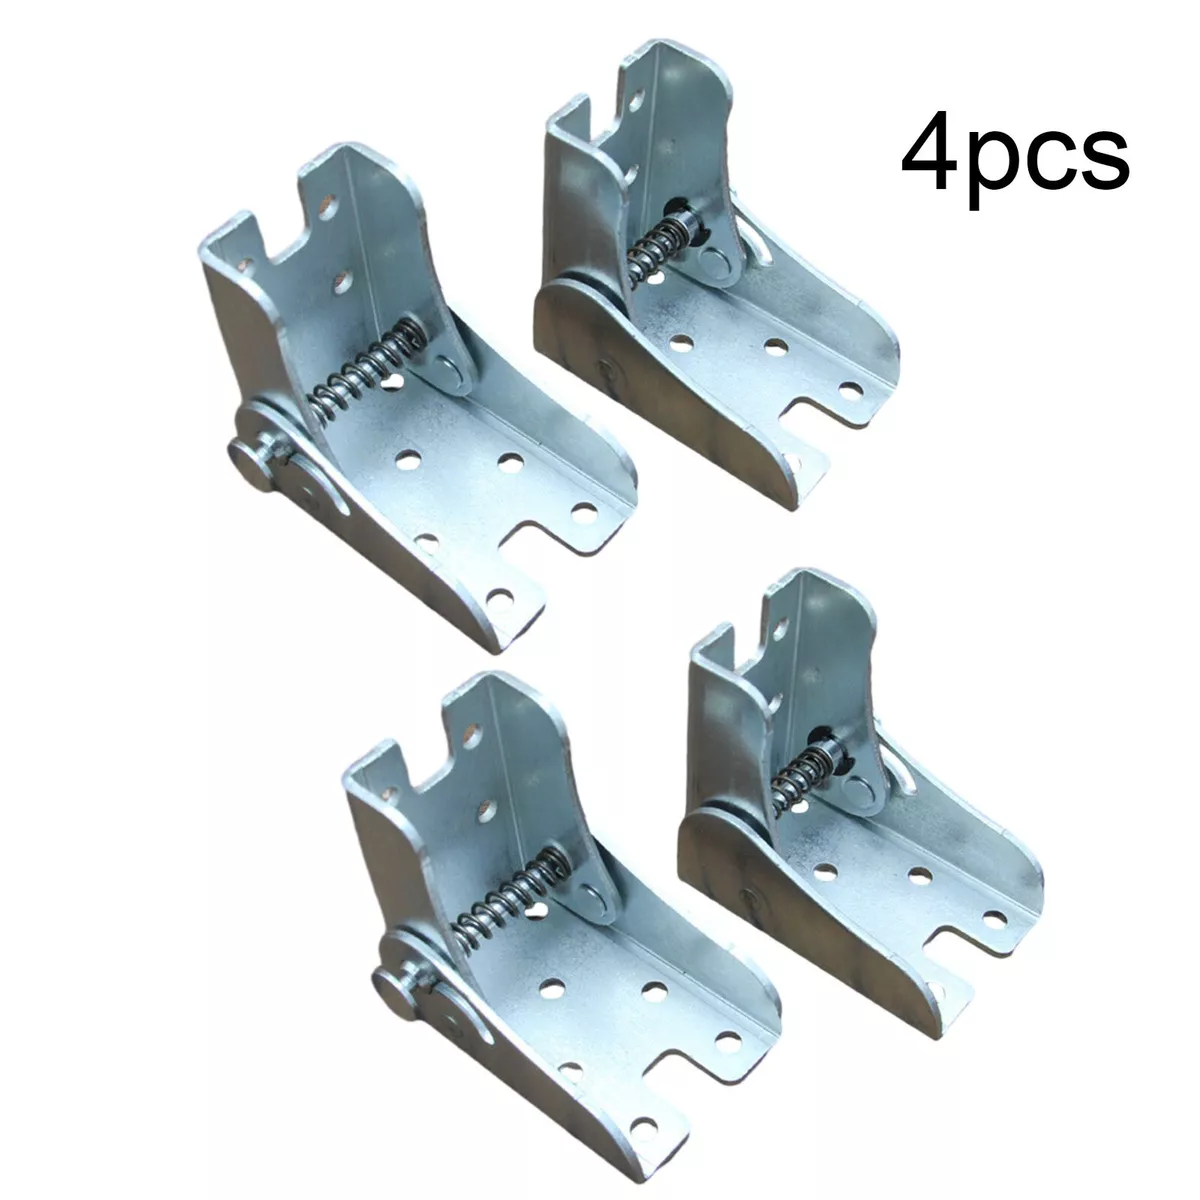 4pcs 90 Degree Self-locking Folding Hinge